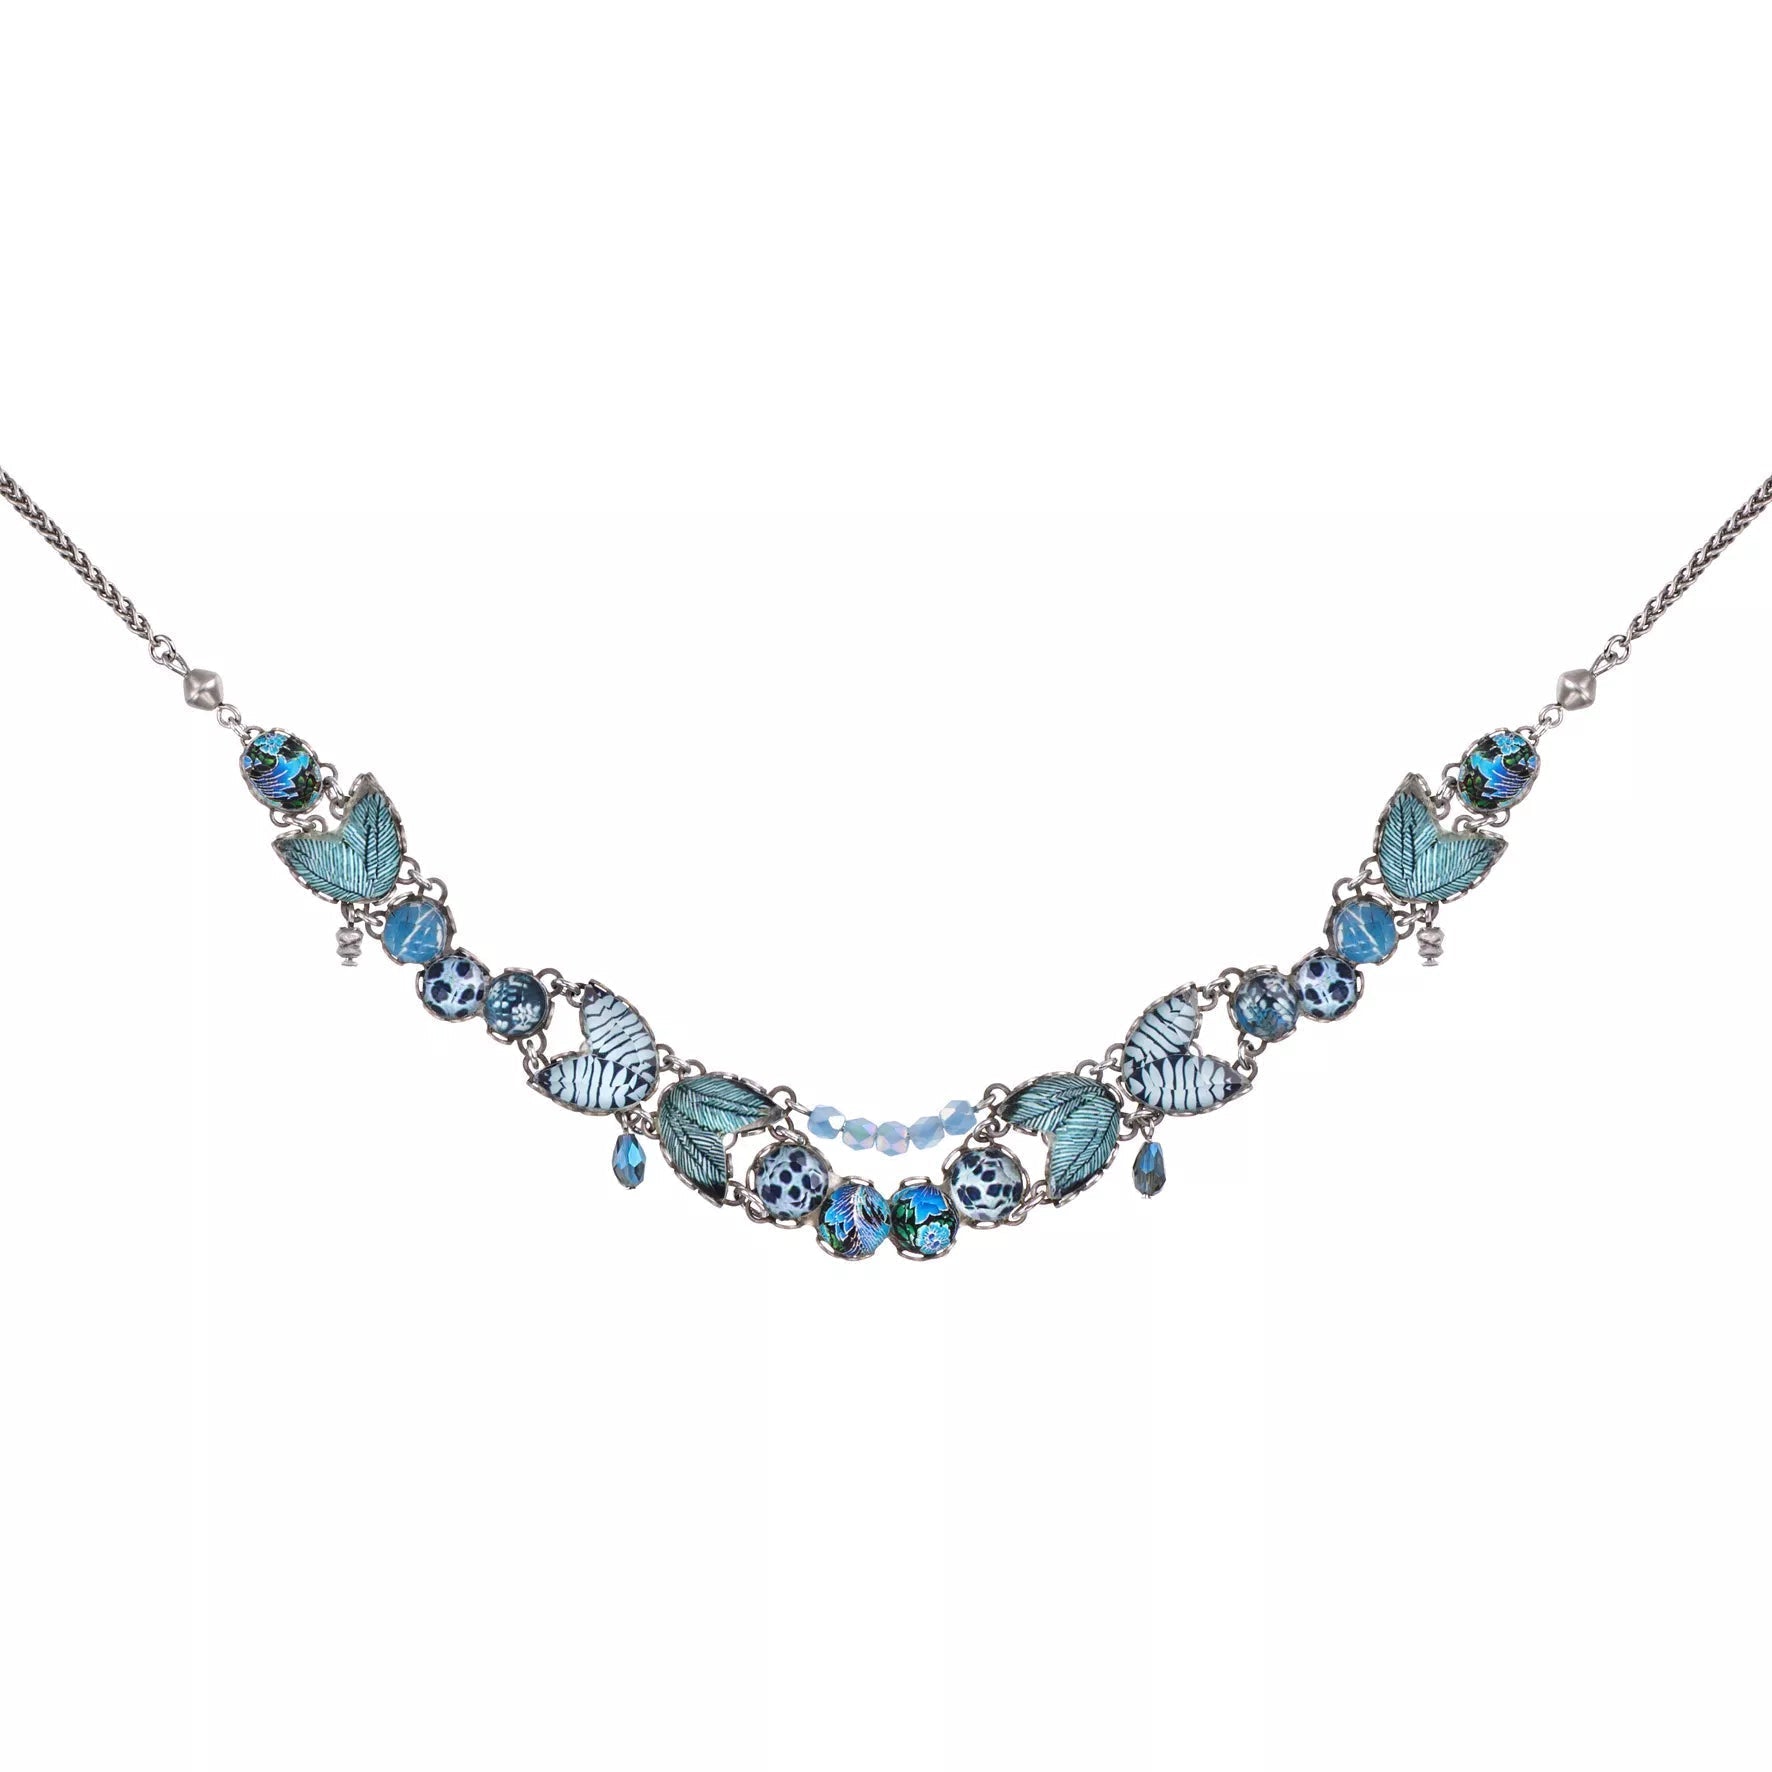 Deep Sea Talia Necklace - The Nancy Smillie Shop - Art, Jewellery & Designer Gifts Glasgow